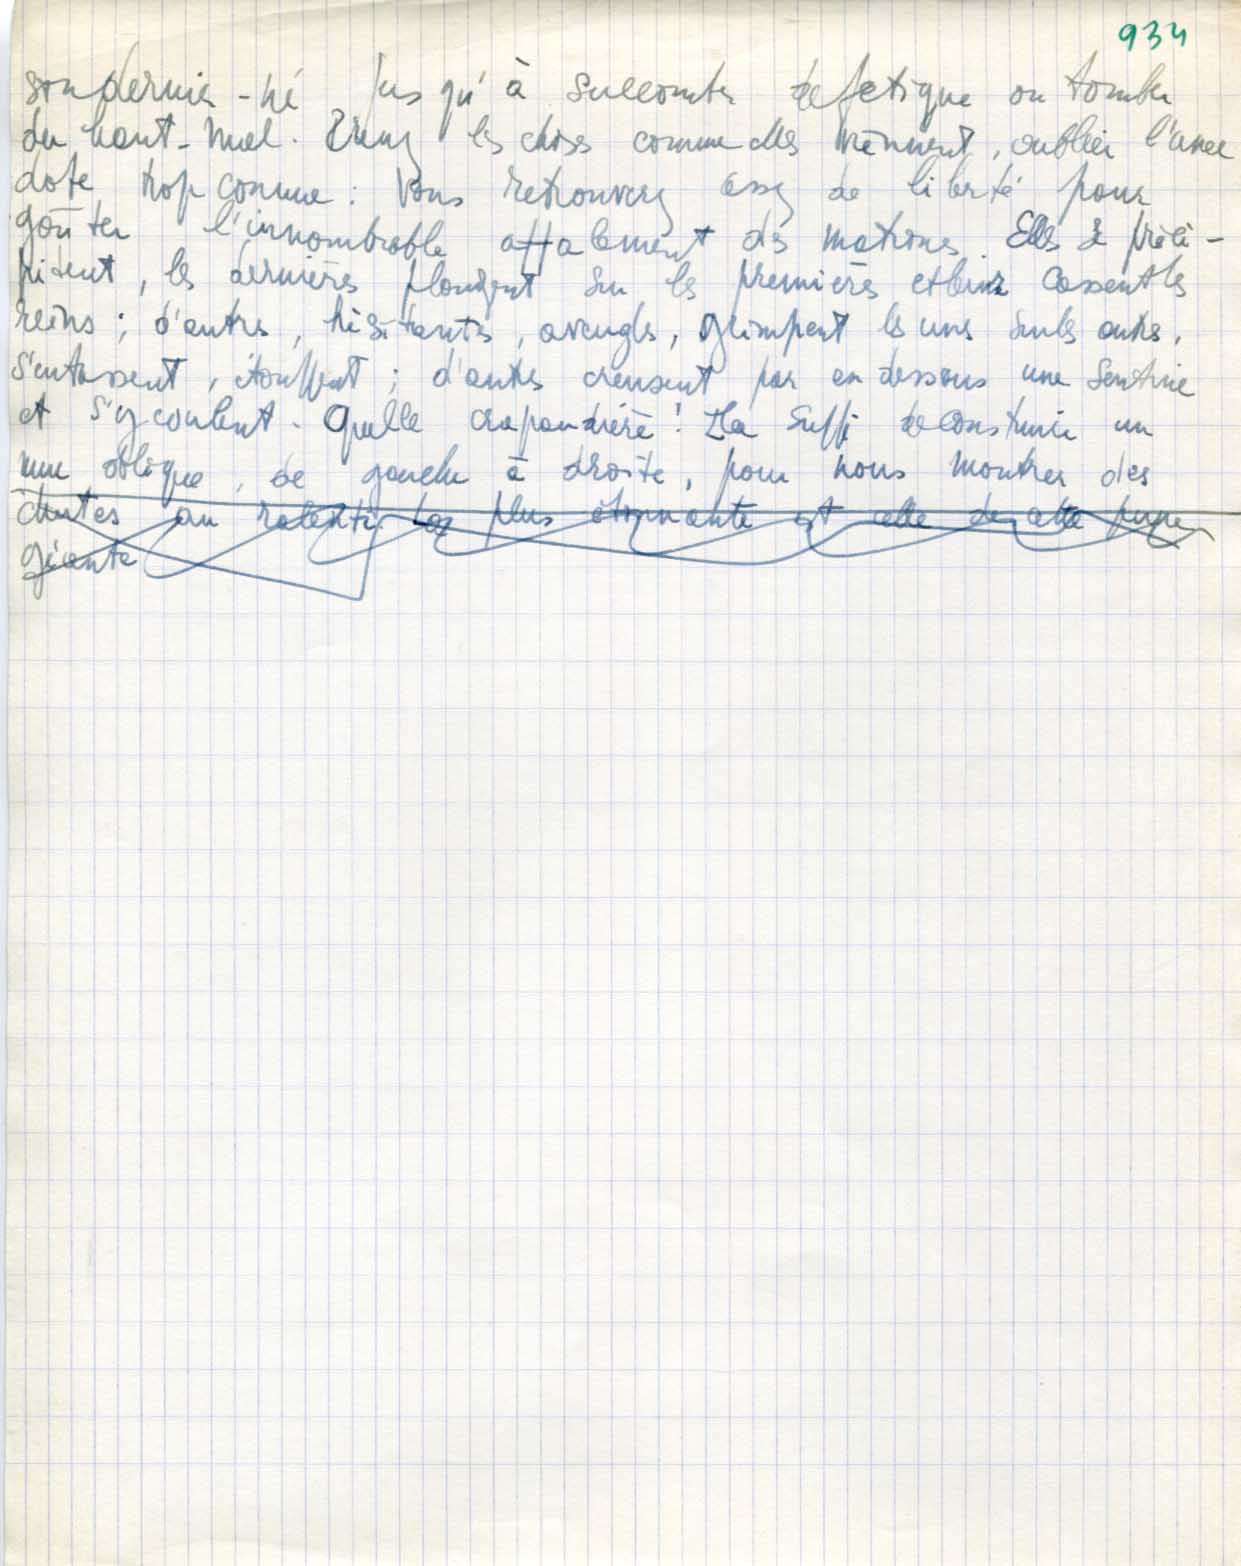 Jean-Paul Sartre 963 pages manuscript on Tintoretto